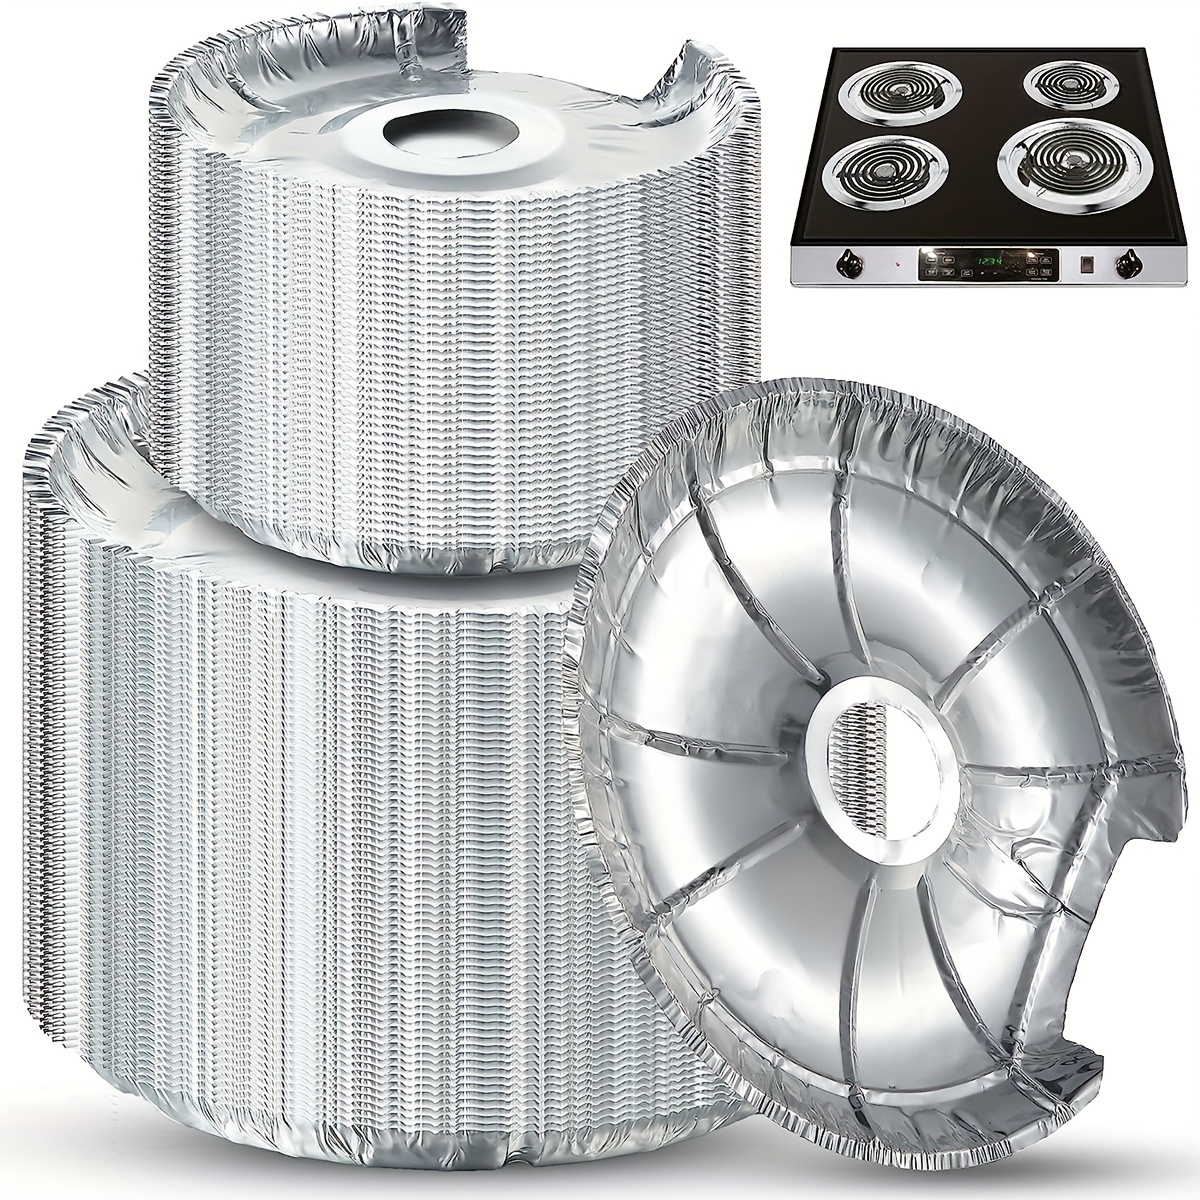 Round Electric Stove Burner Coversdisposable Stove Top Aluminum